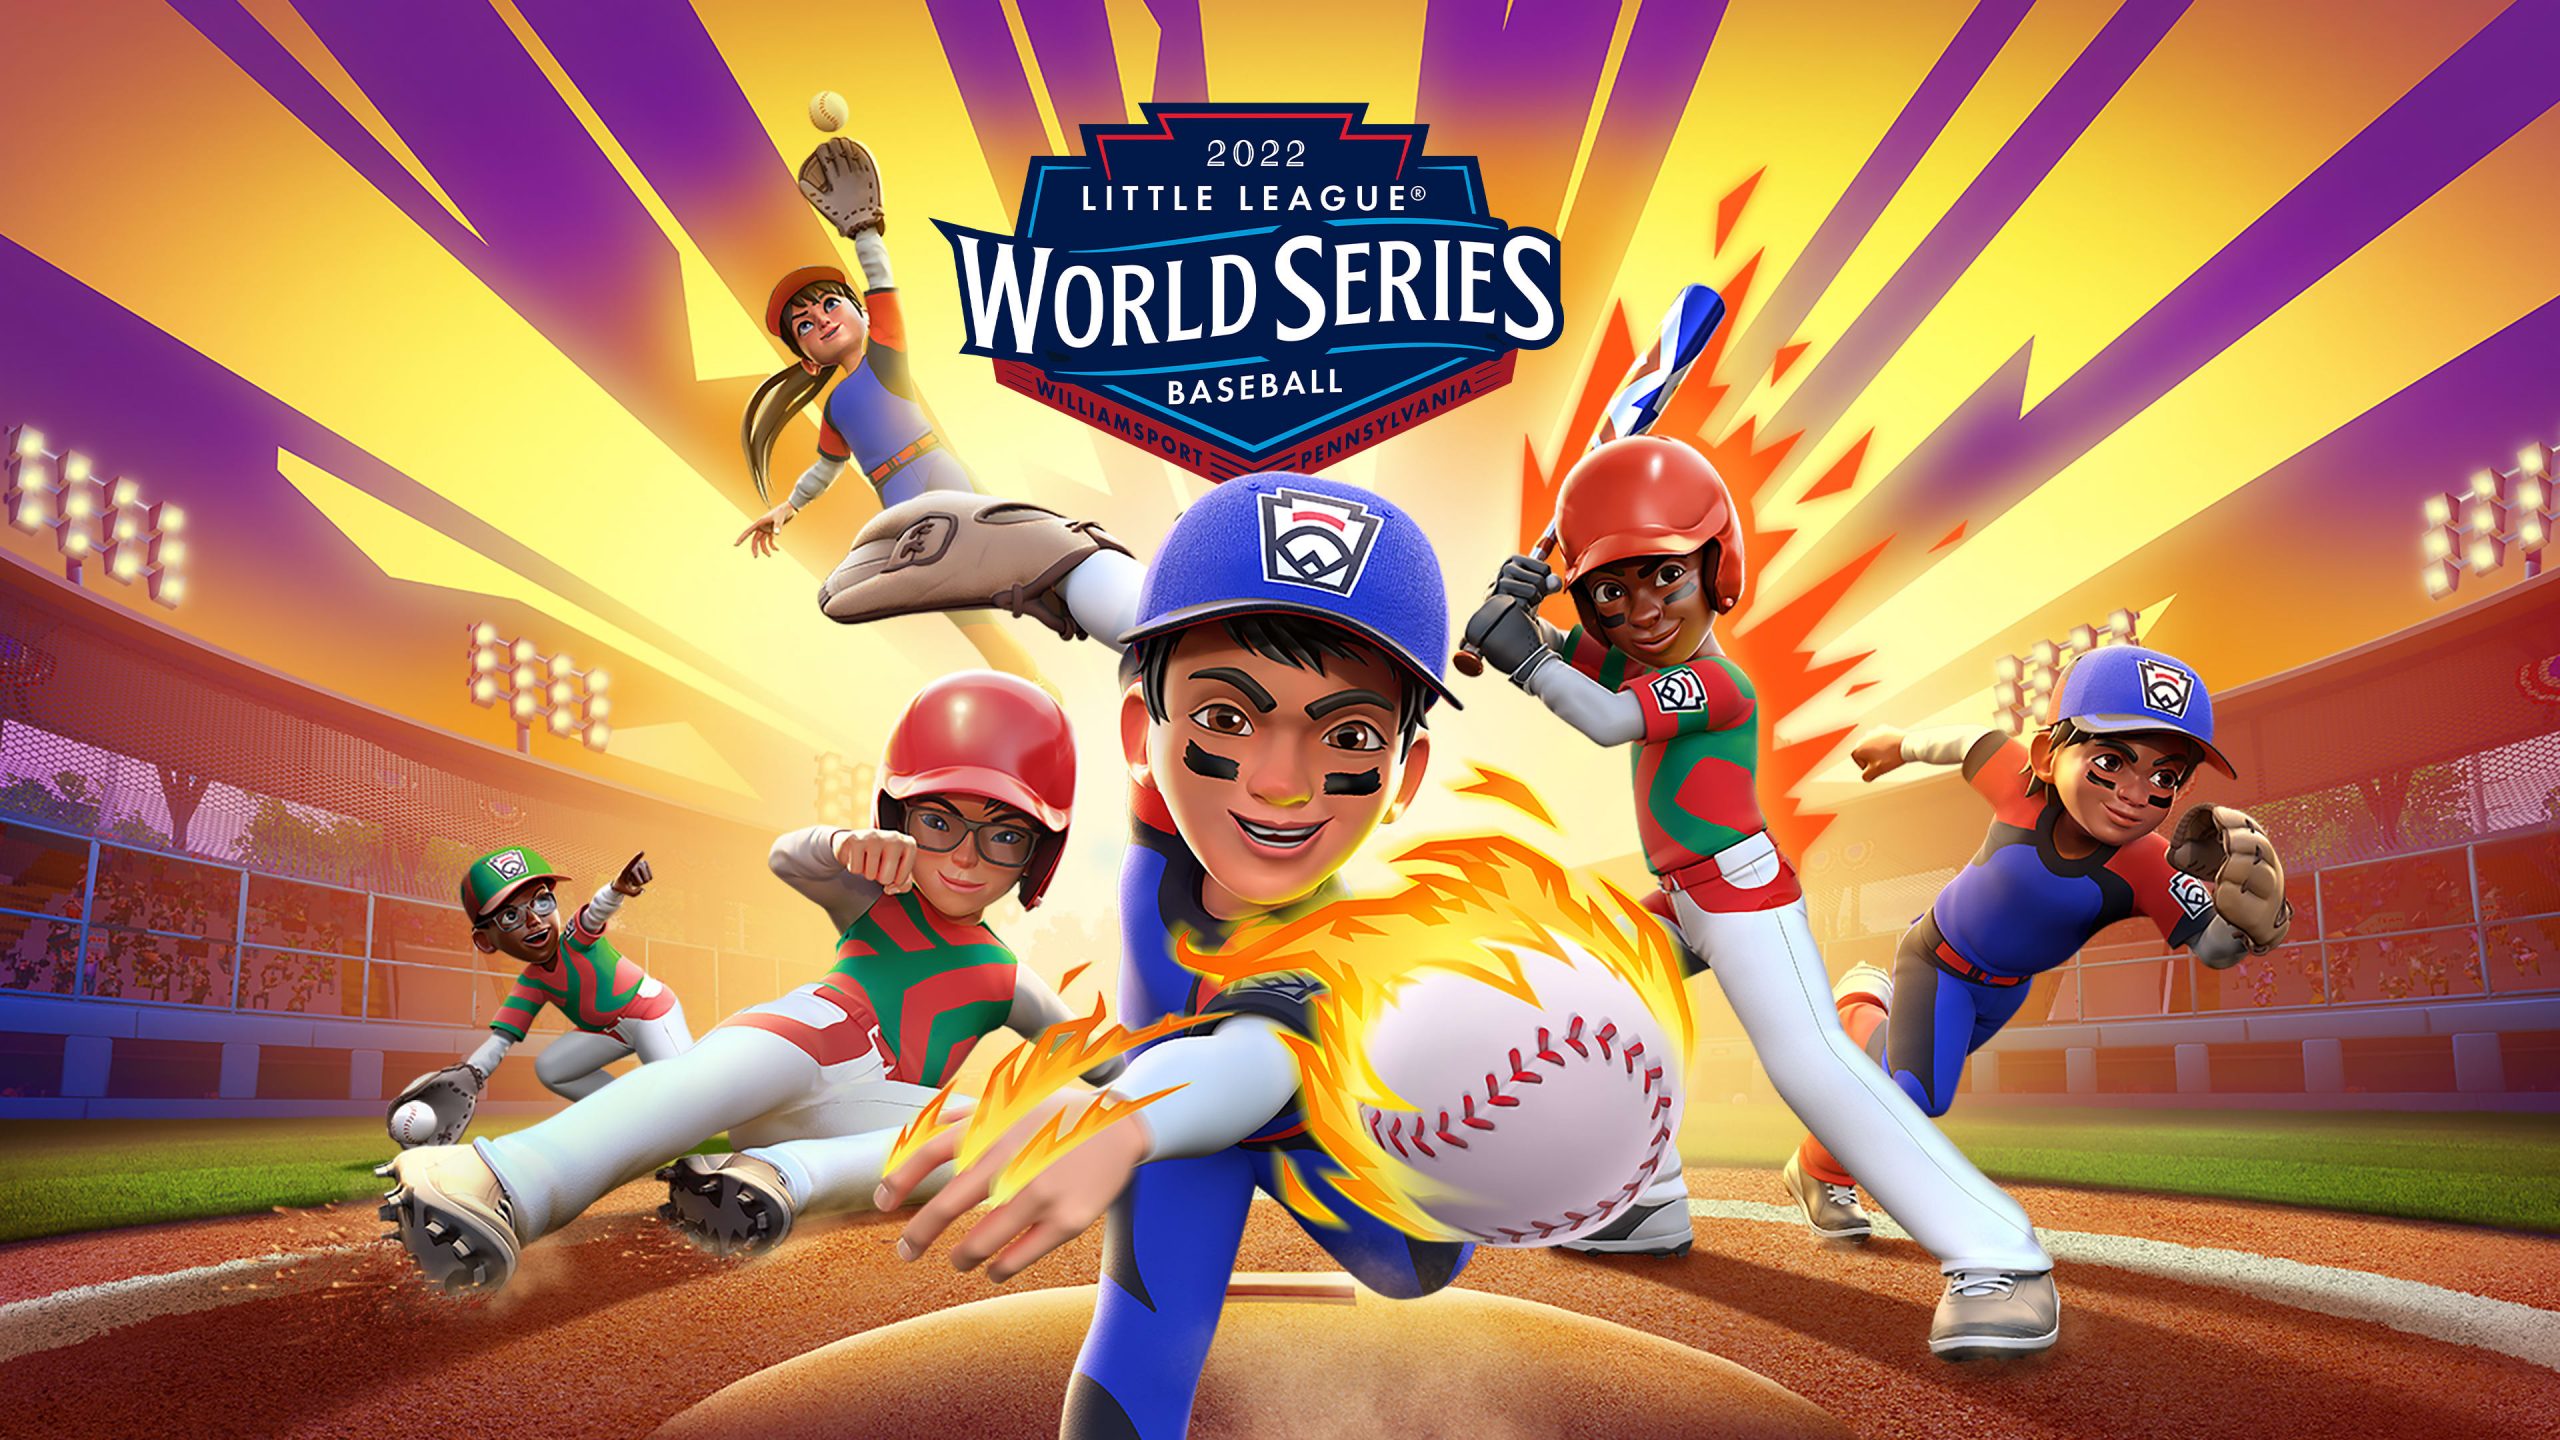 Little League World Series Baseball 2022 gets August release date